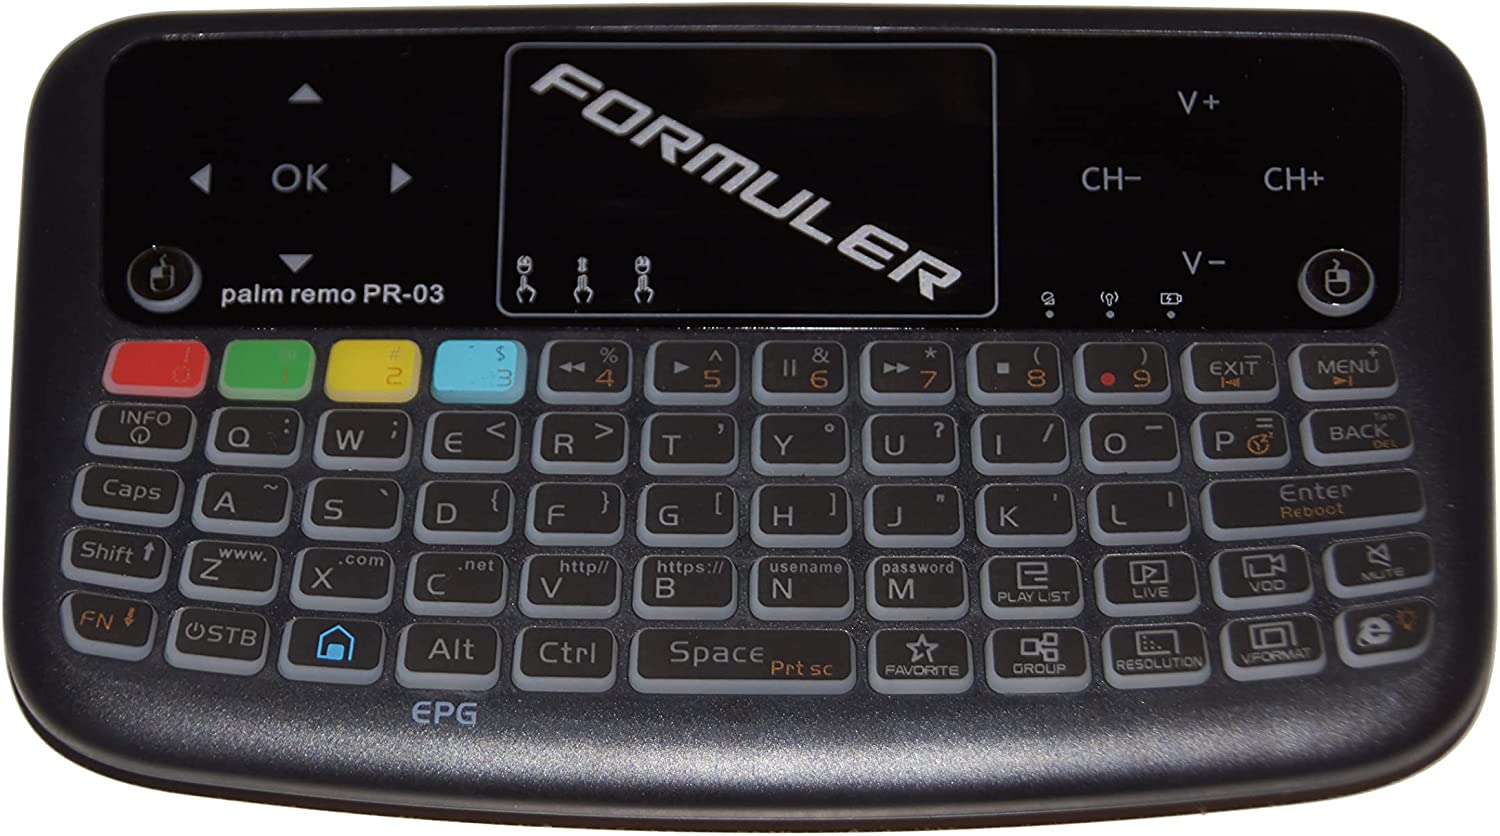 Formuler Z10 + ACCESORIOS GRATUITOS: 1 x Mini teclado inalámbrico con panel táctil + 1 x Hub USB + Cubierta naranja para control remoto